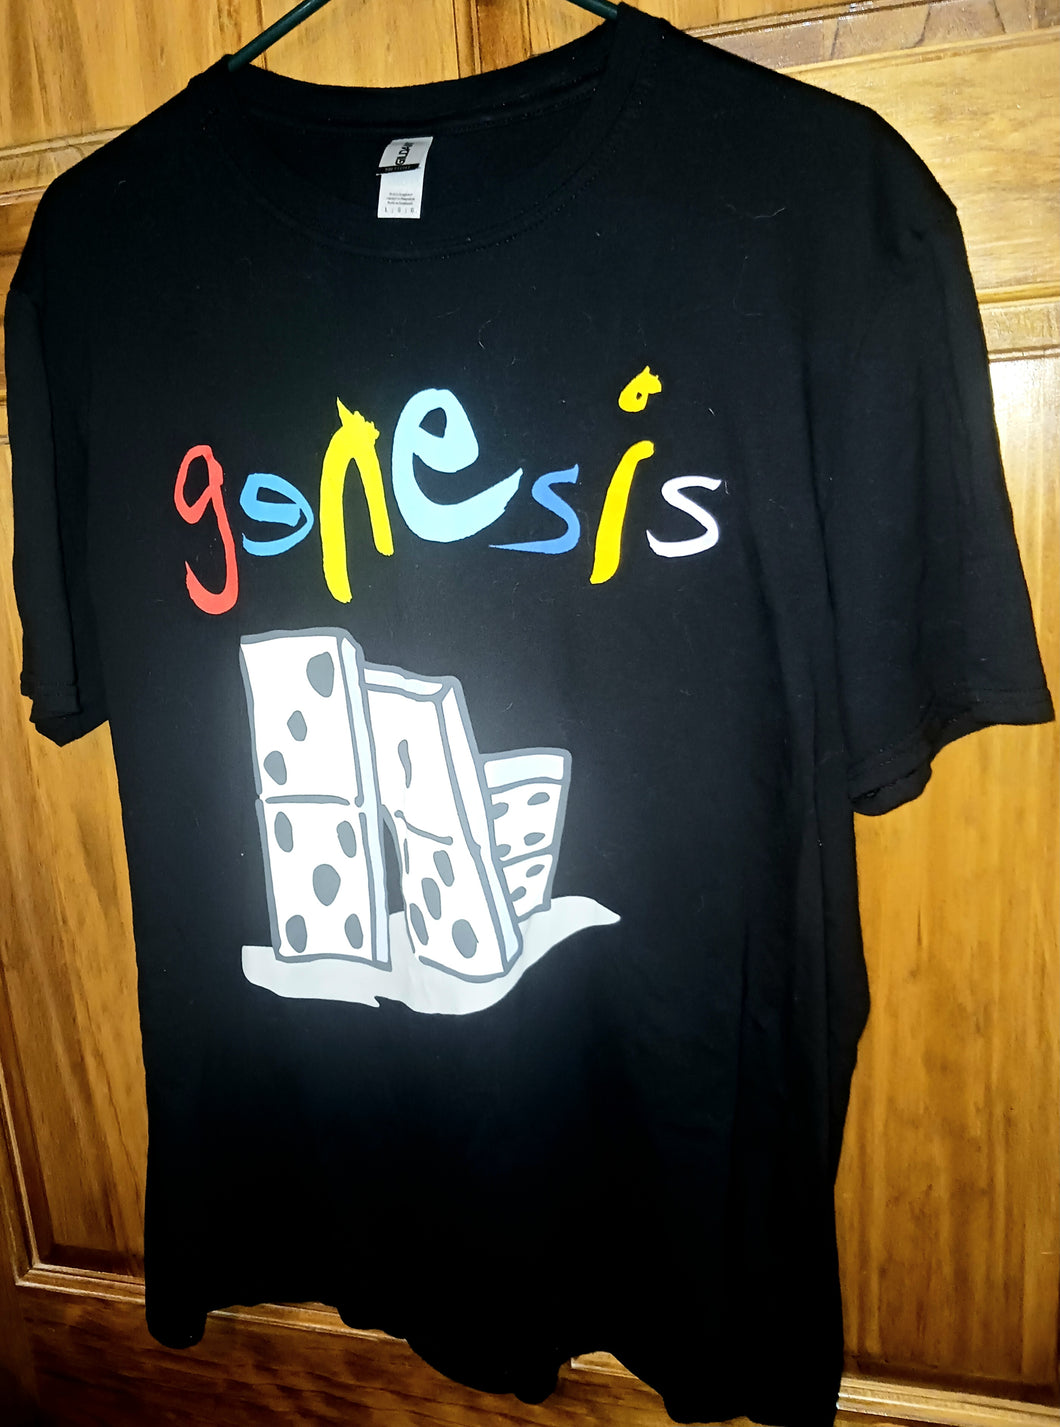 Genesis The Last Domino 2021 2022 Concert Tour Black T-Shirt Adults Size Large